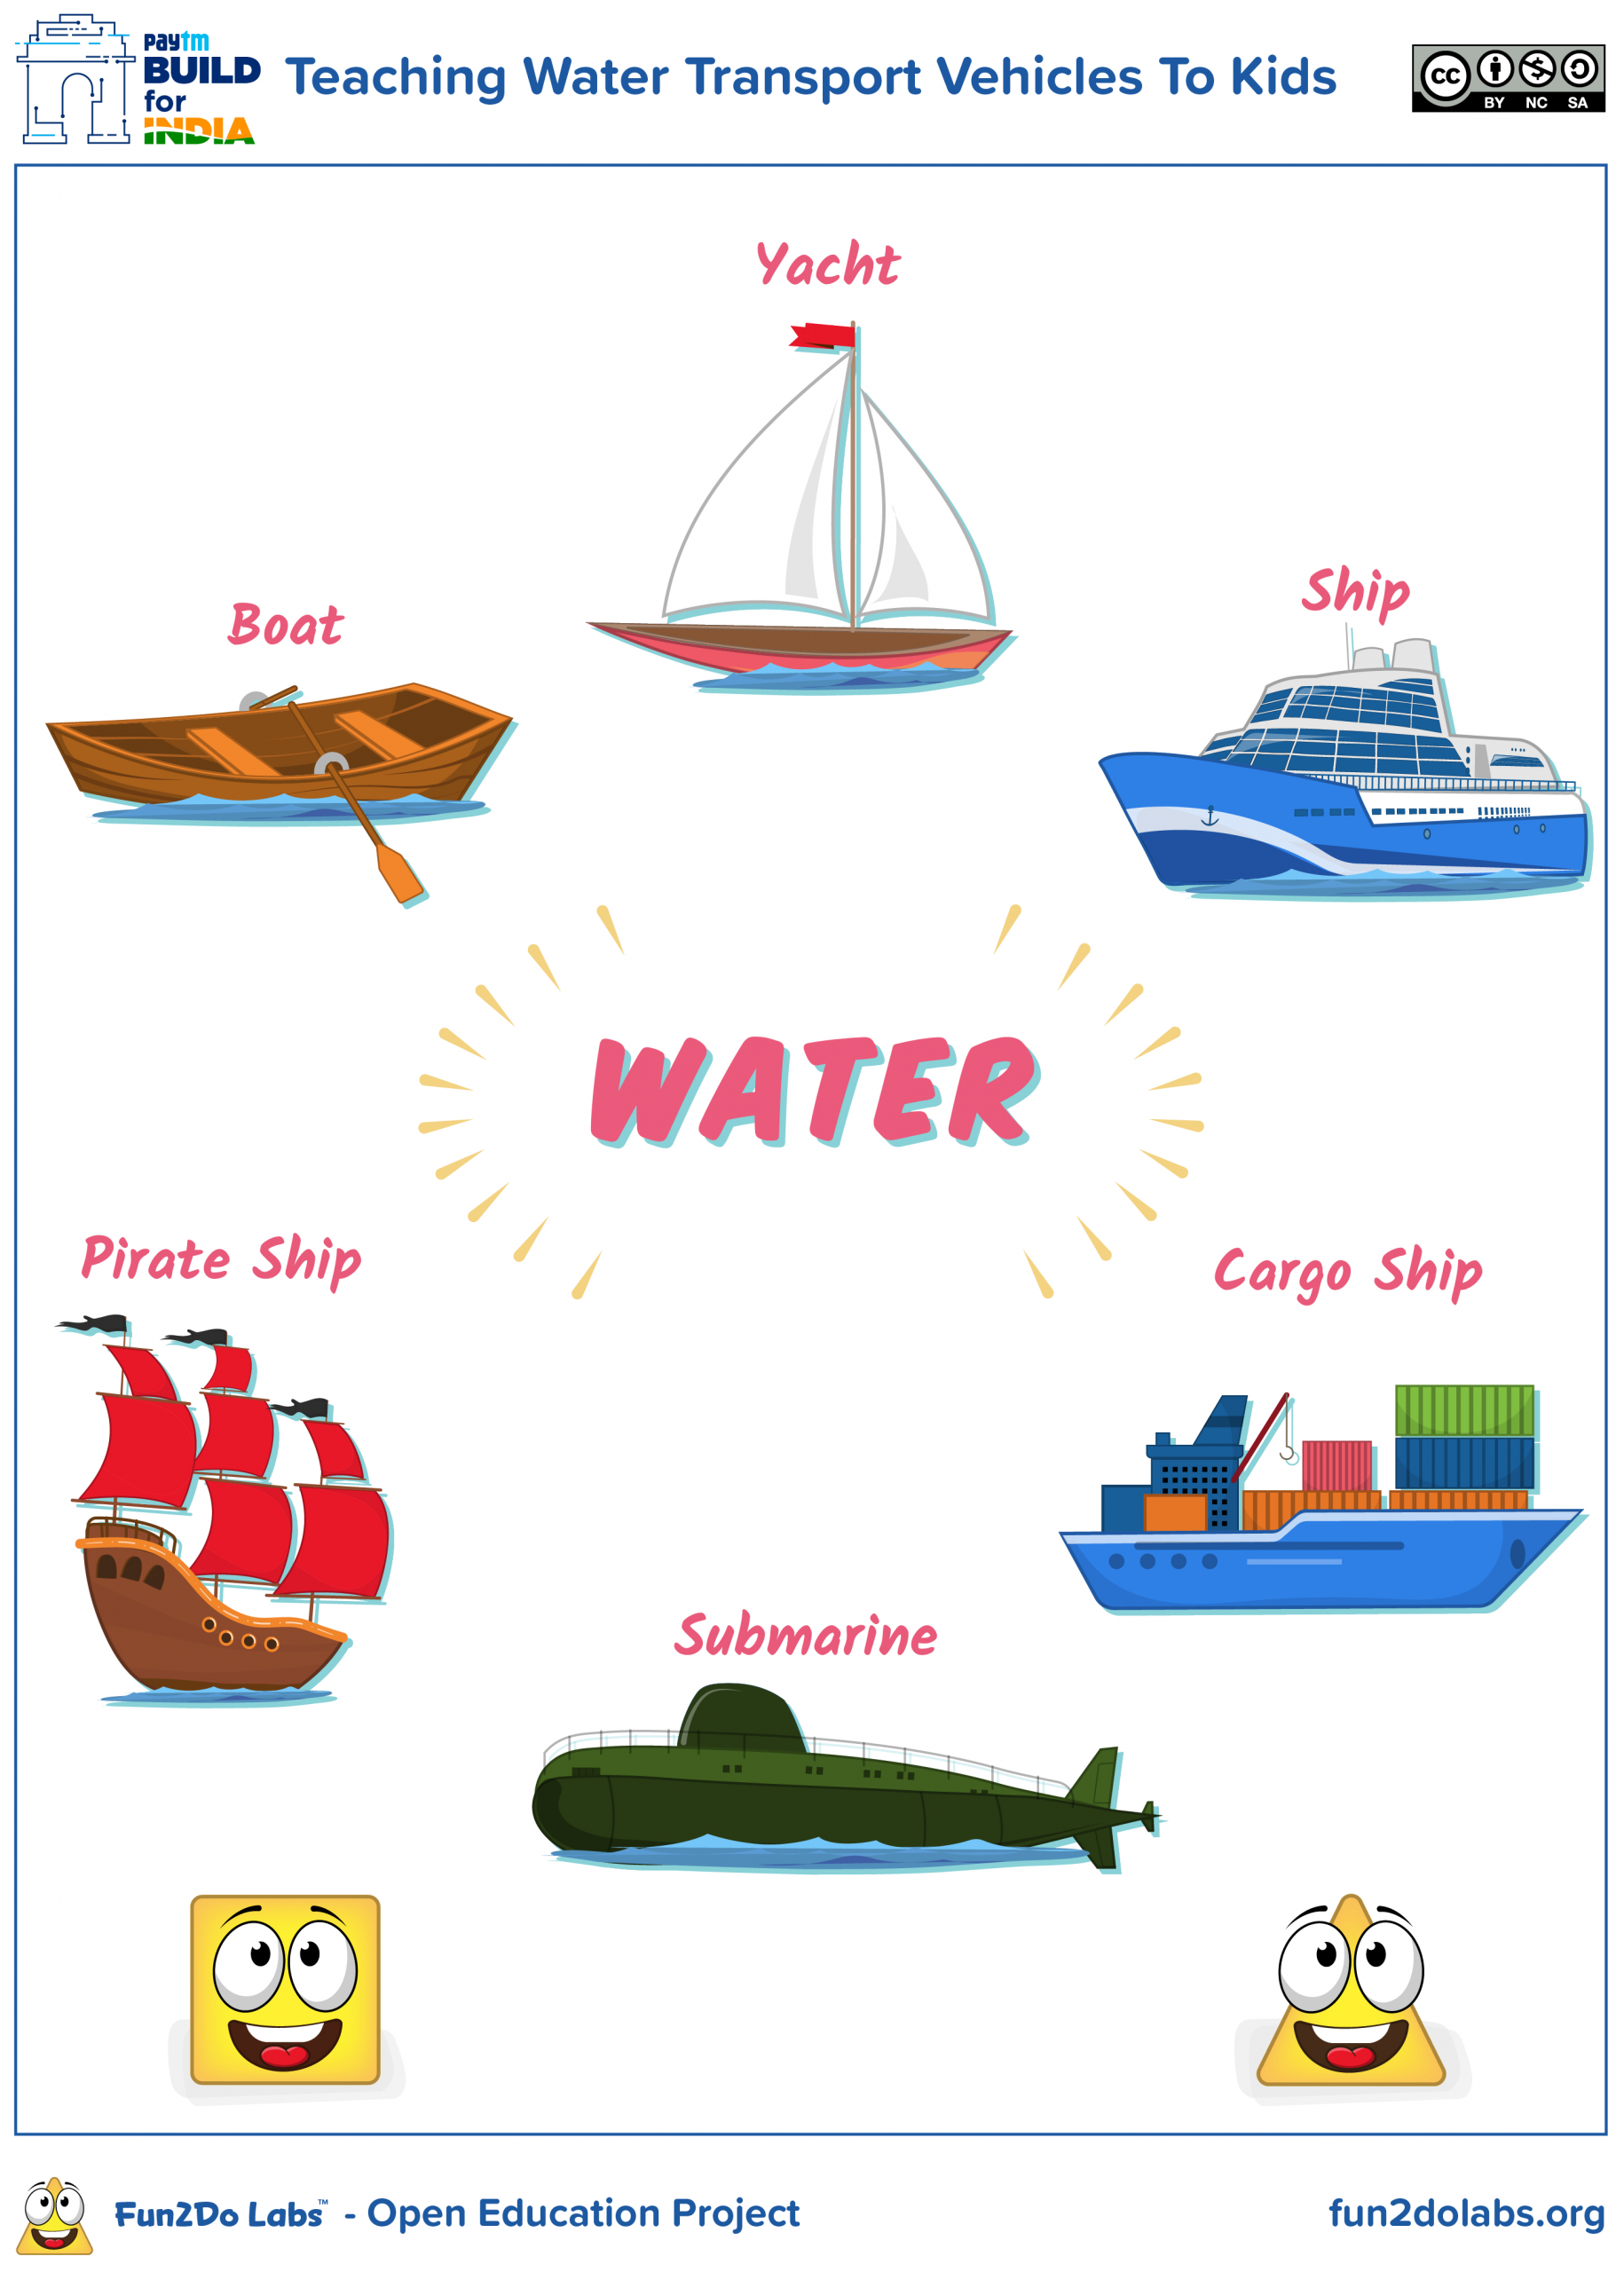 Teaching Water Transport Vehicles (Yacht, Ship, Cargo Ship